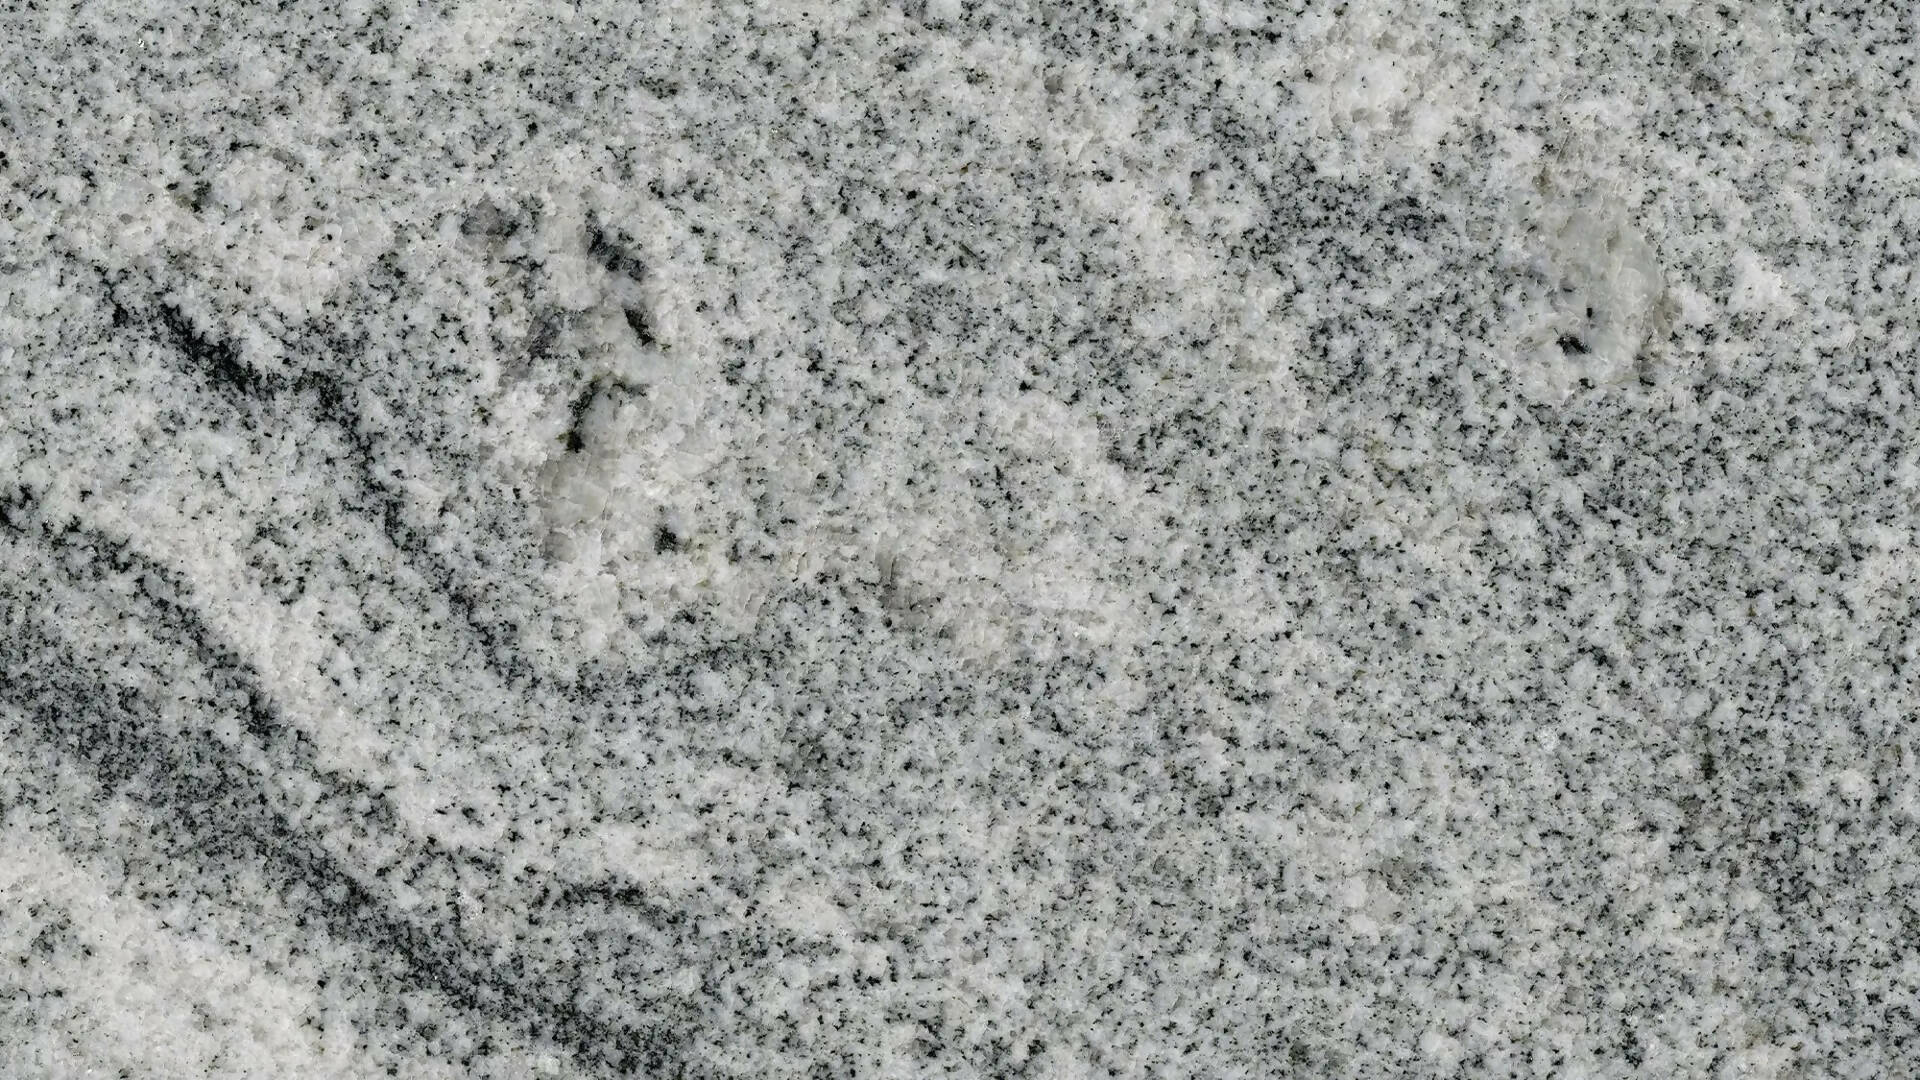 WISKONT WHITE GRANITE,Granite,Brachot,www.work-tops.com